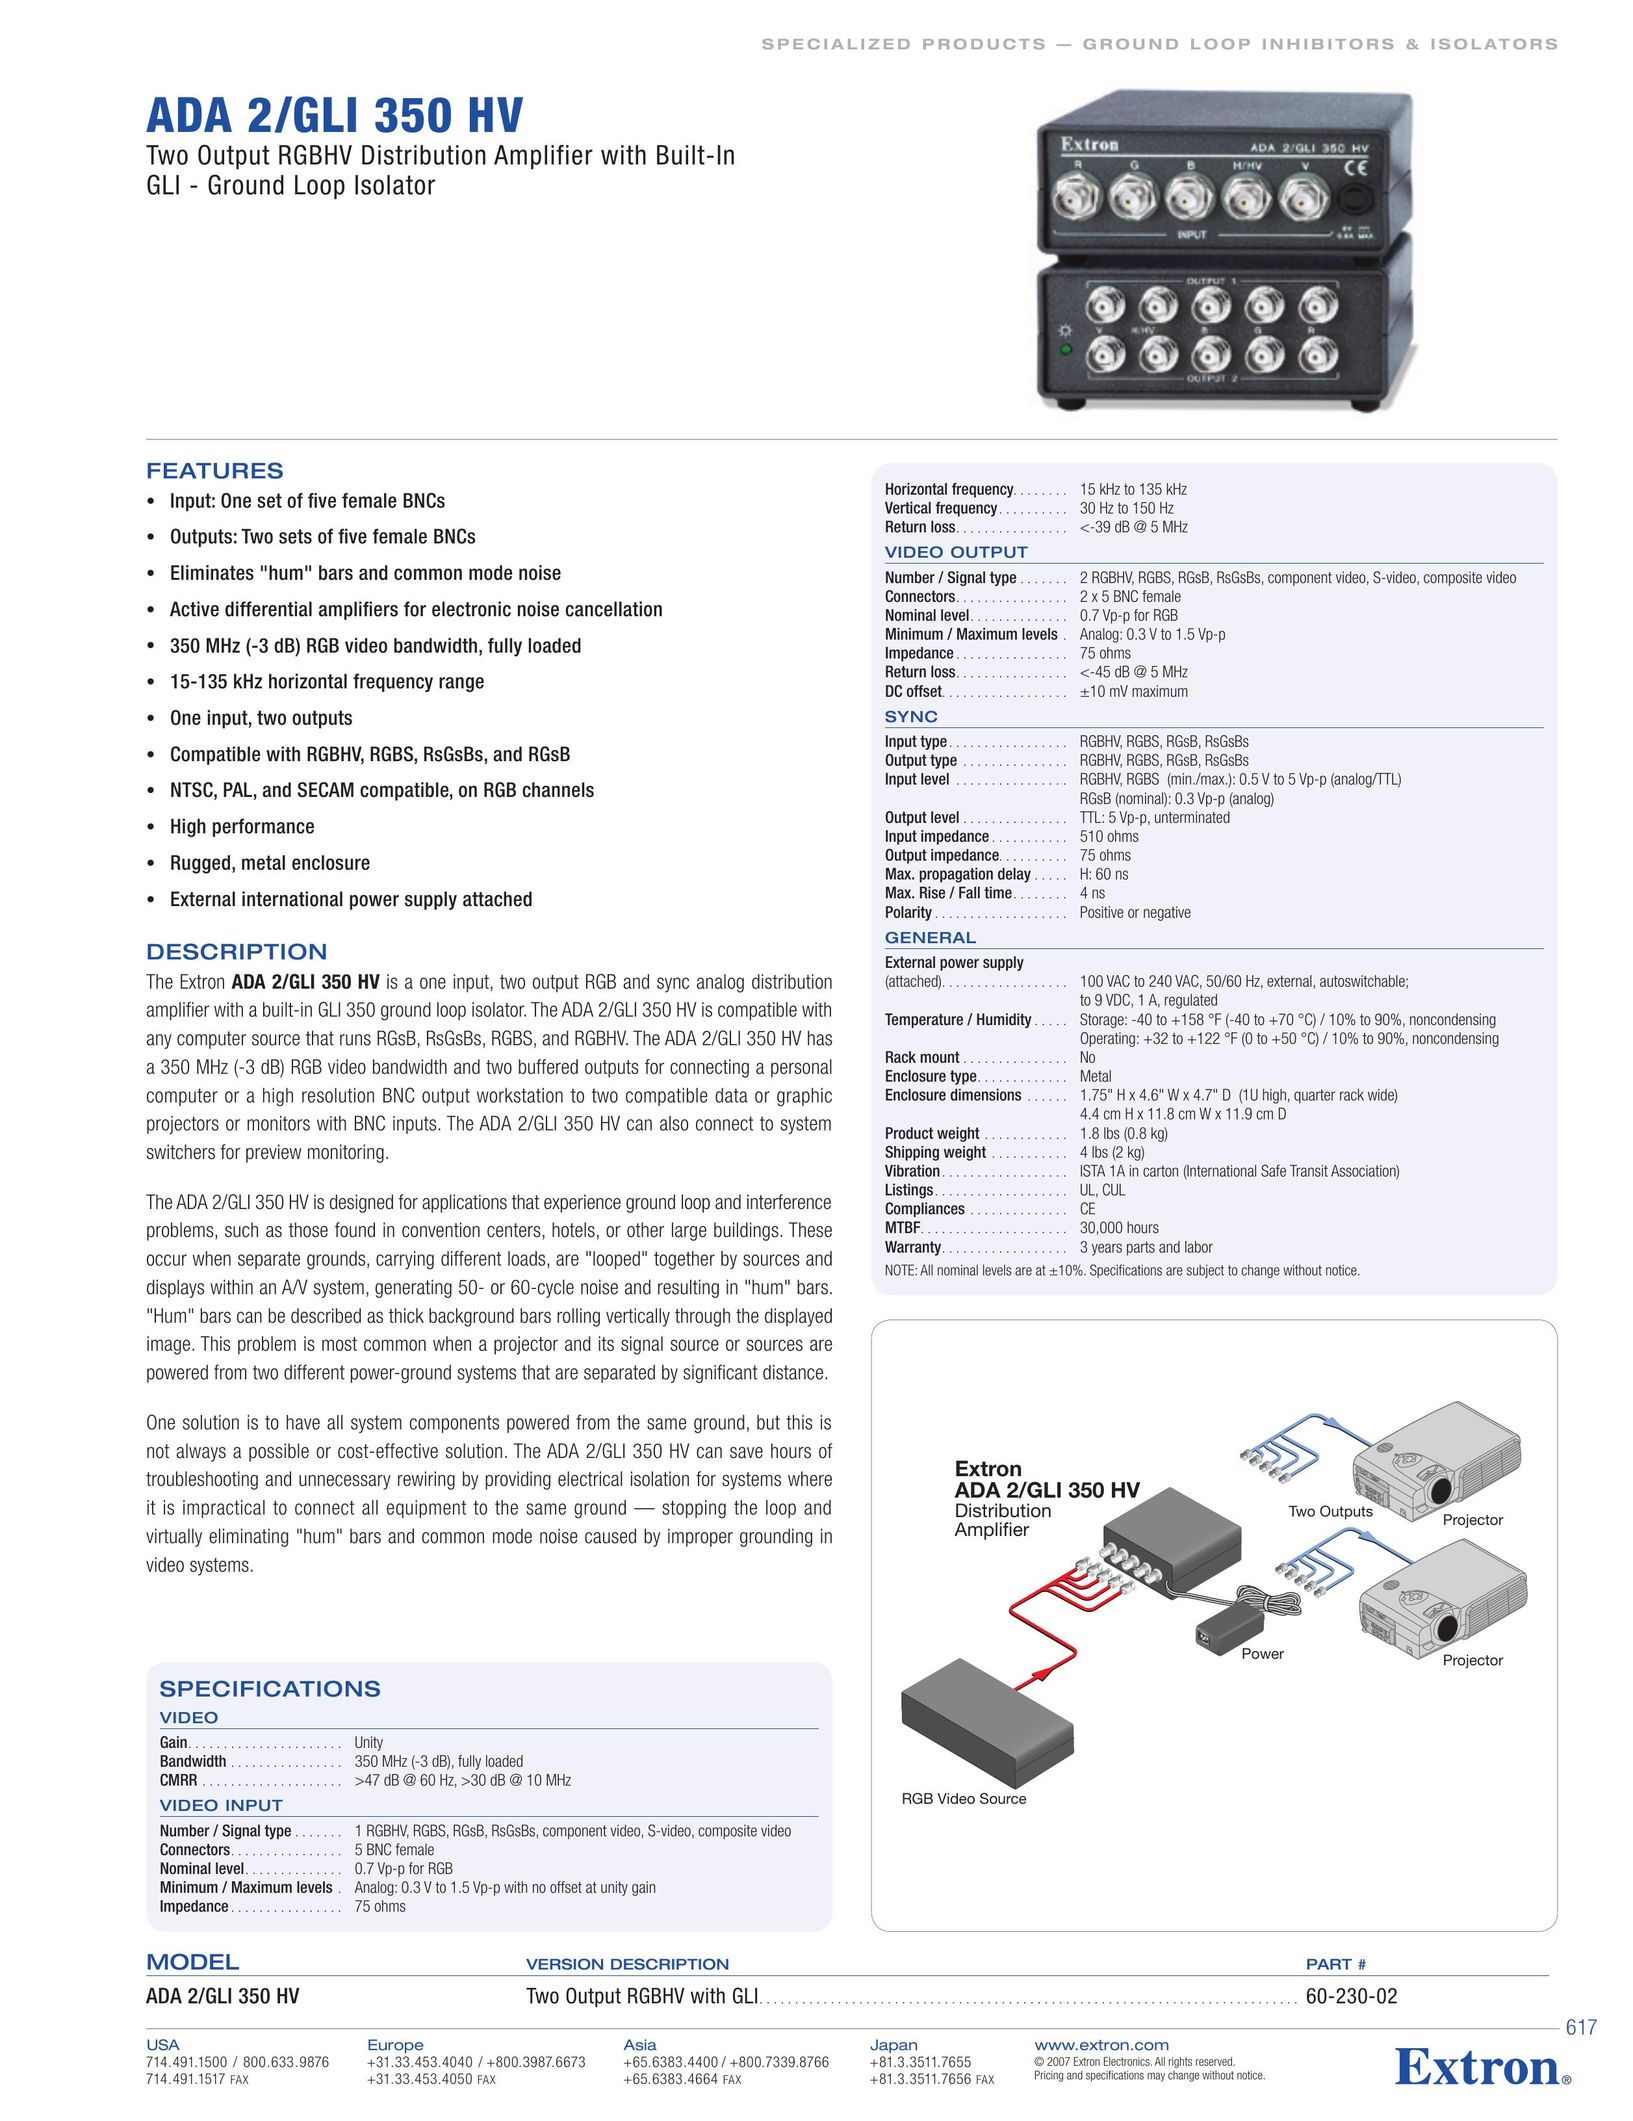 Extron electronic ADA 2/GLI 350 HV Stereo Amplifier User Manual